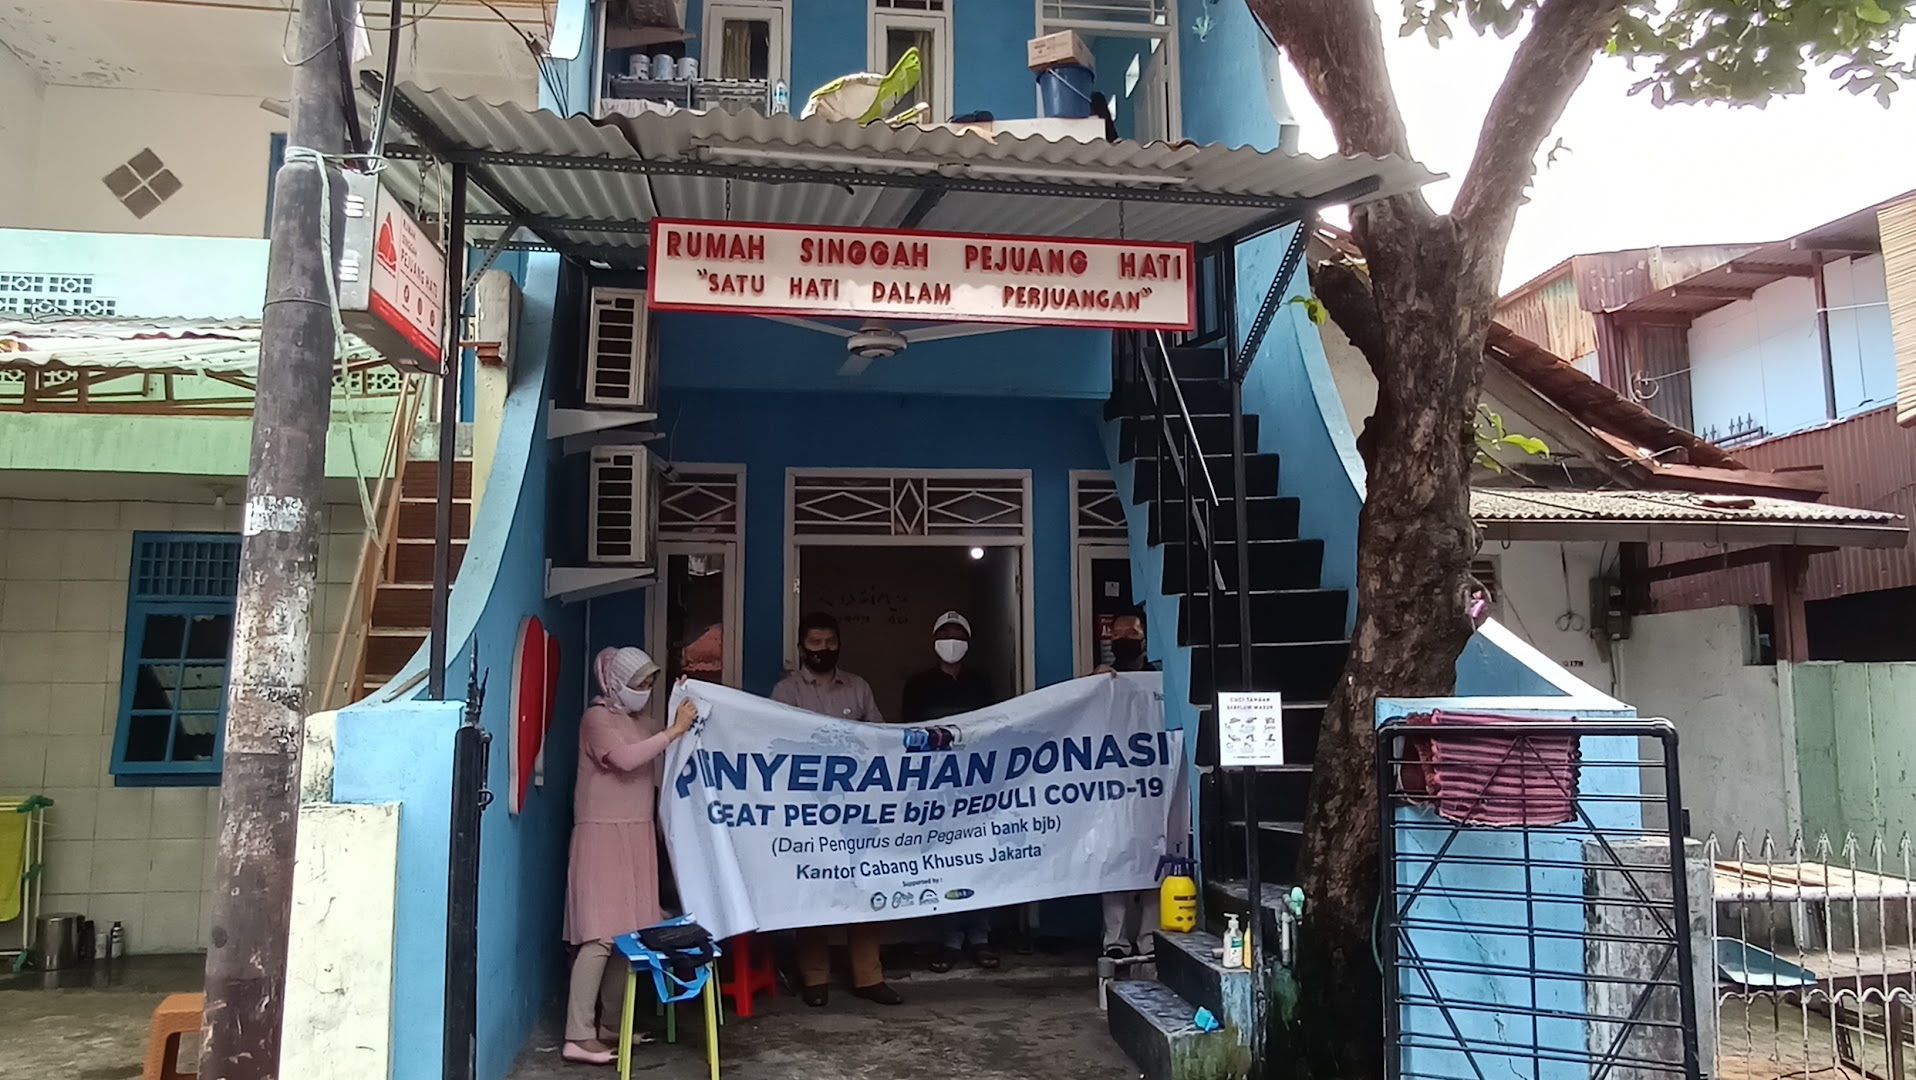 Rumah Singgah Pejuang Hati Jakarta Photo